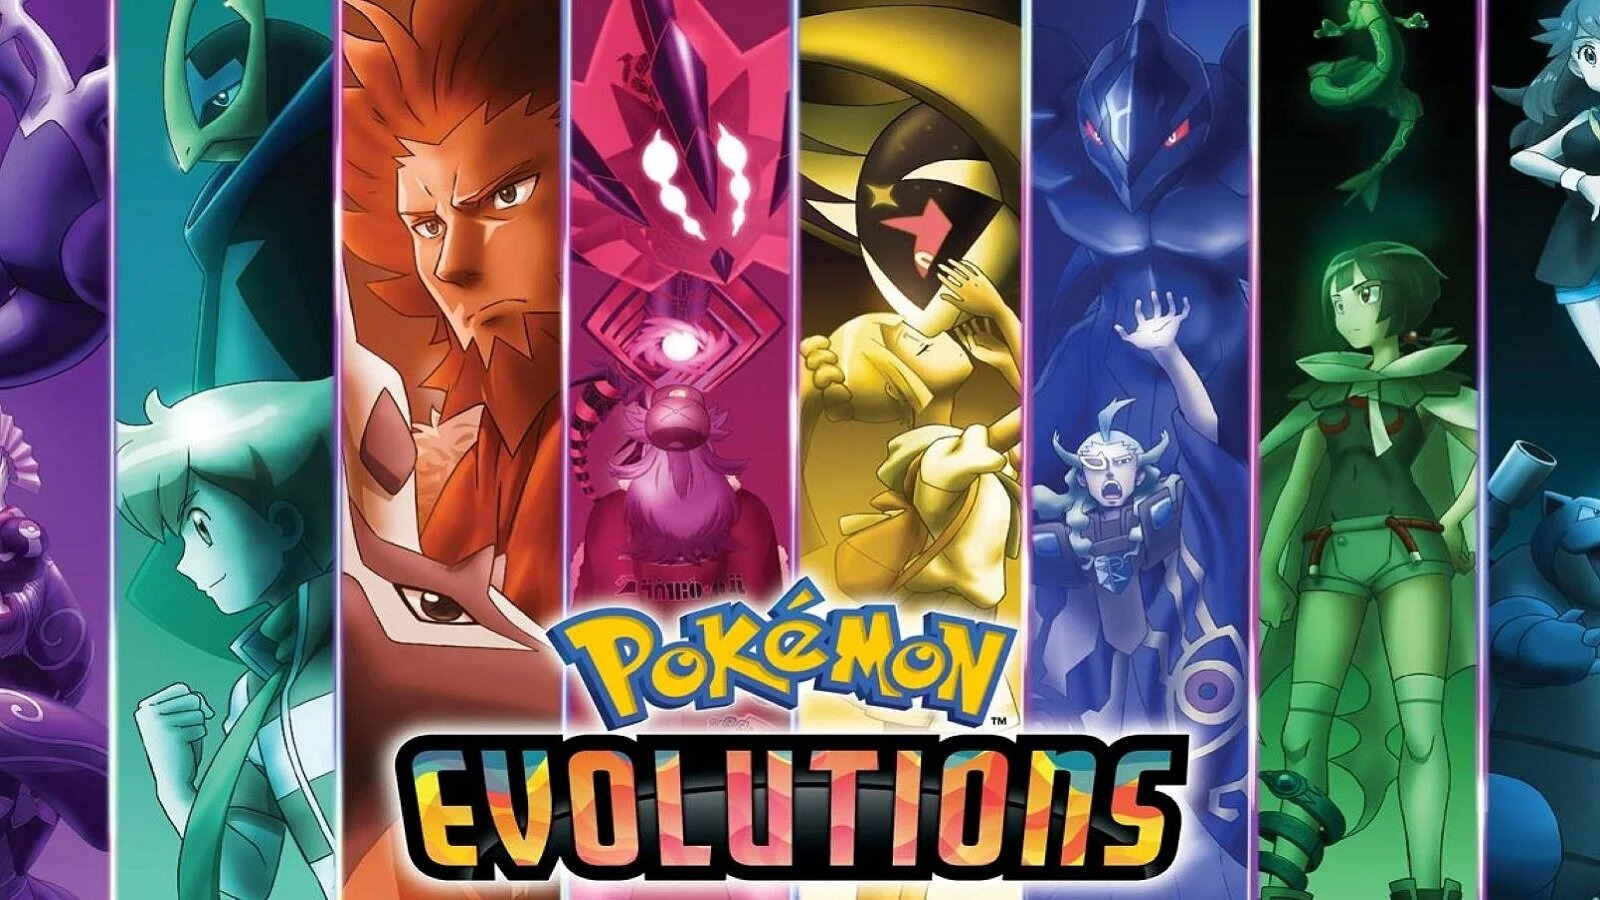 Show Pokémon Evolutions